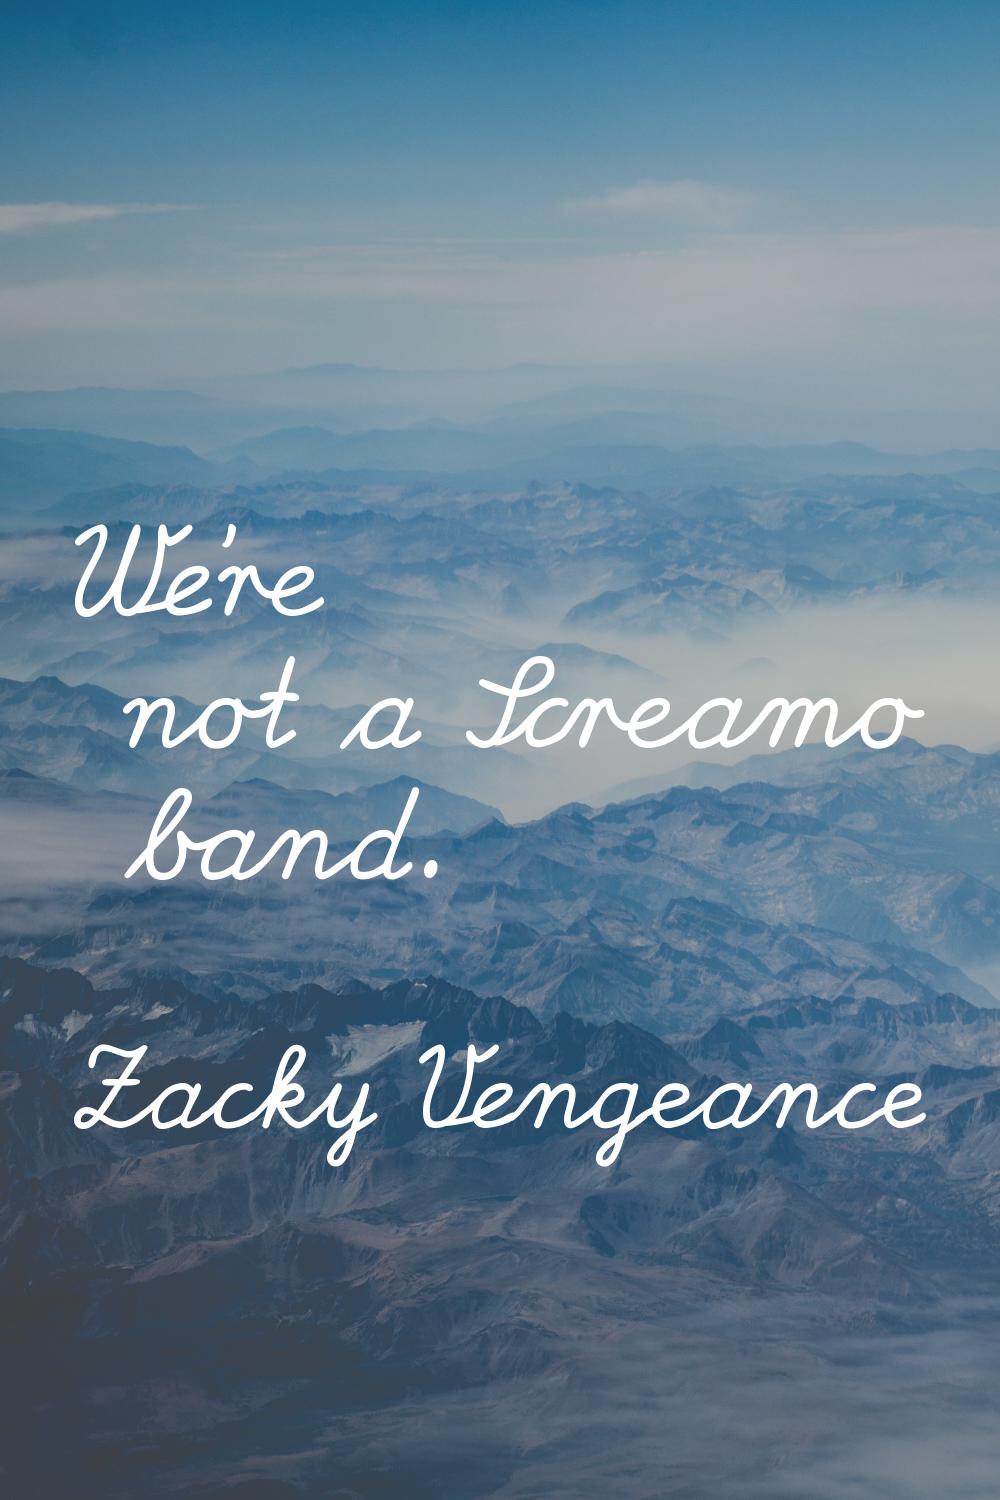 We're not a Screamo band.